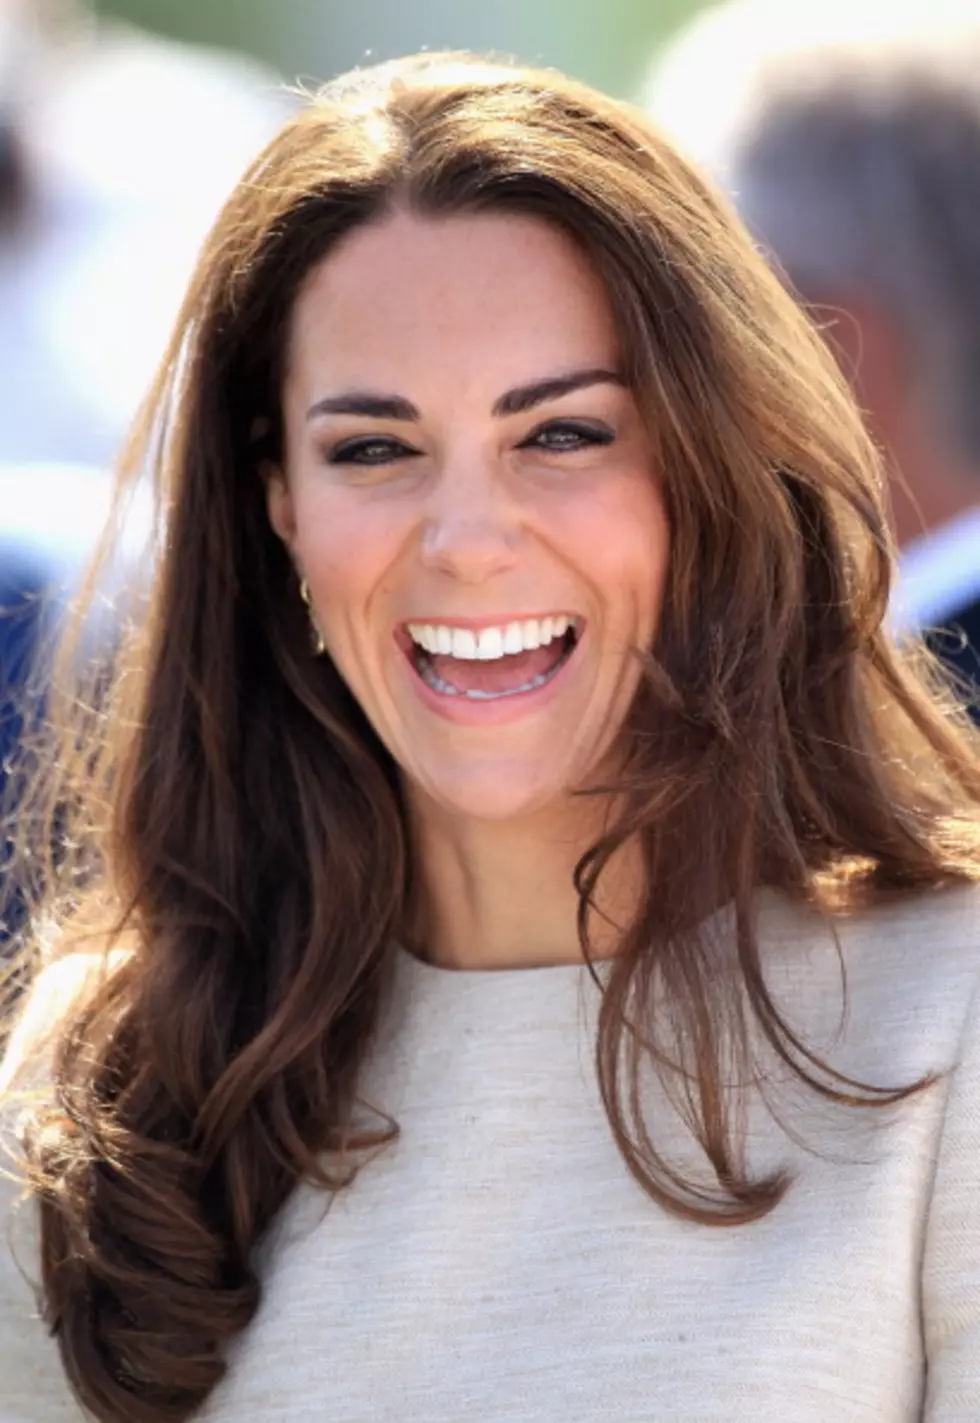 Kate Middleton Shows Some Cheek [PIC]